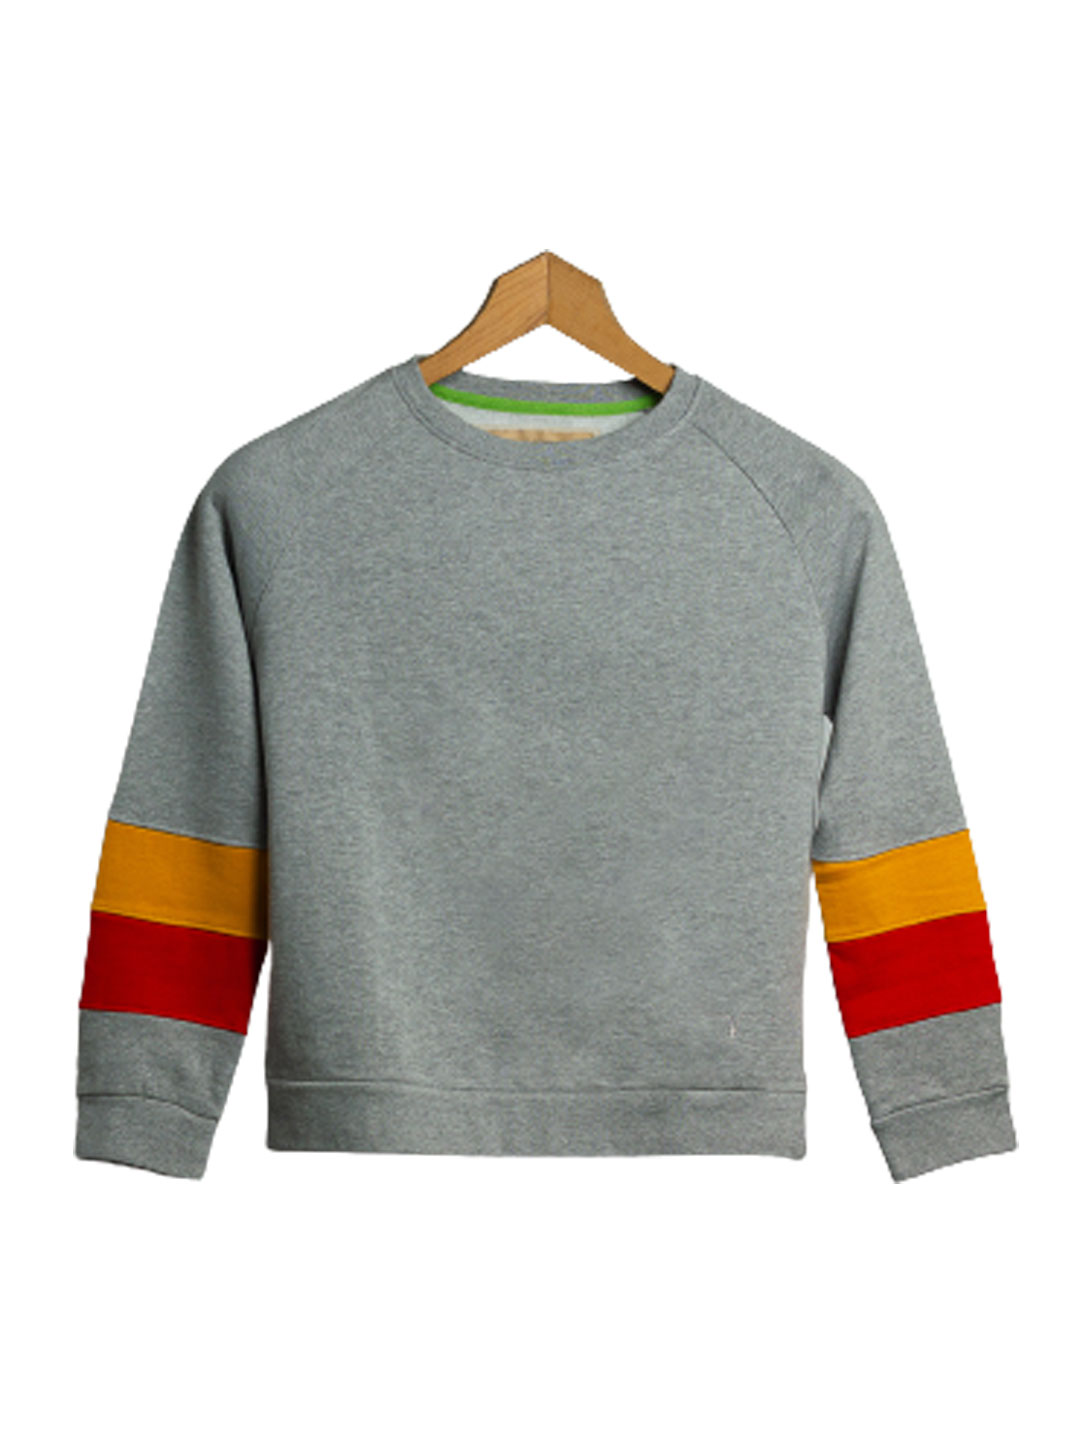 Sweater6